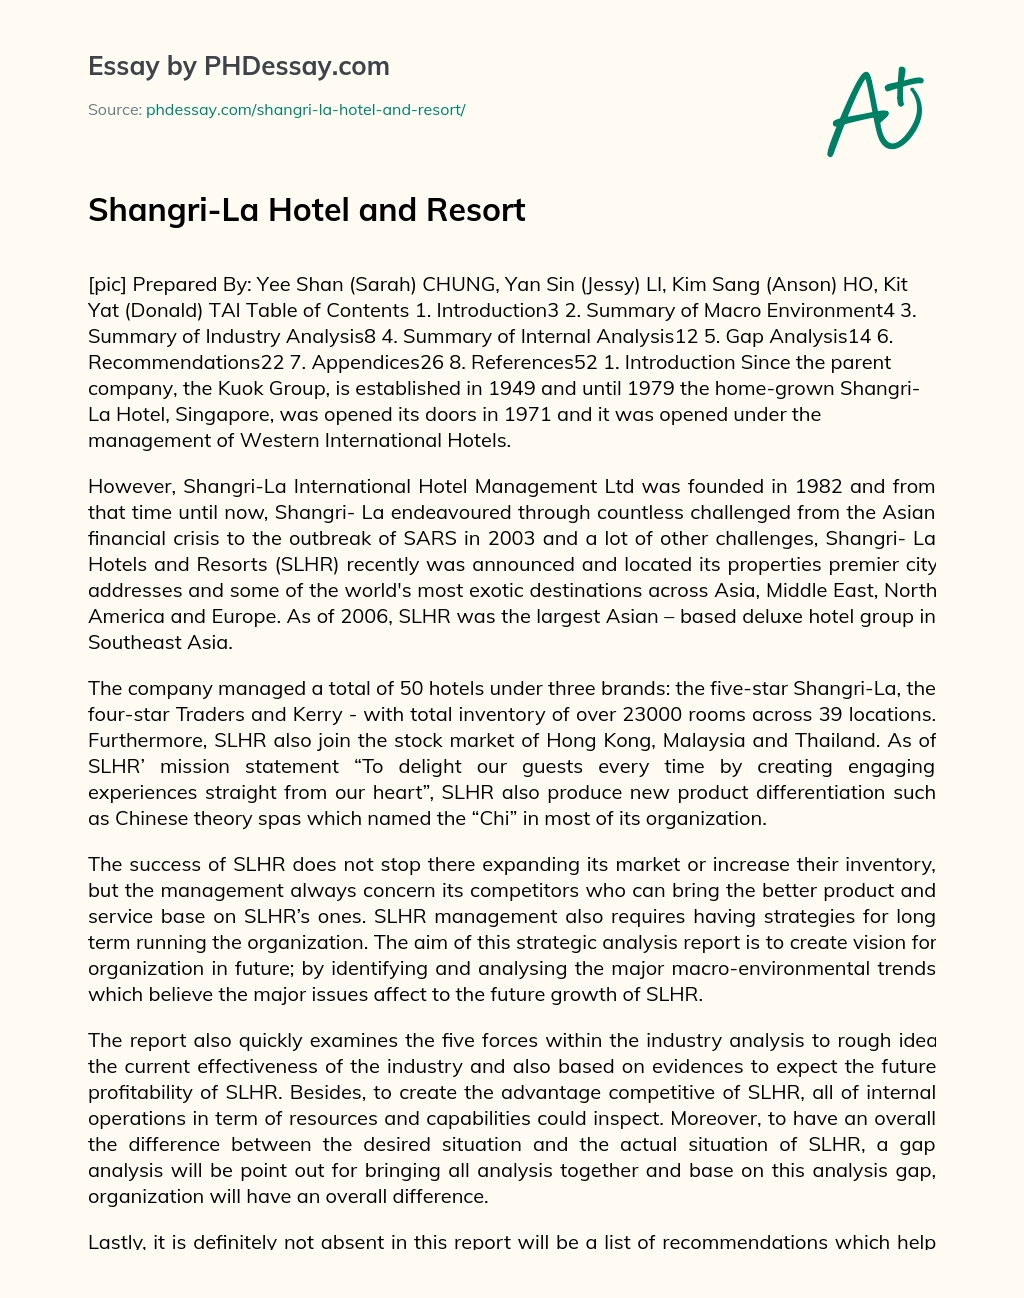 Shangri-La Hotel and Resort essay